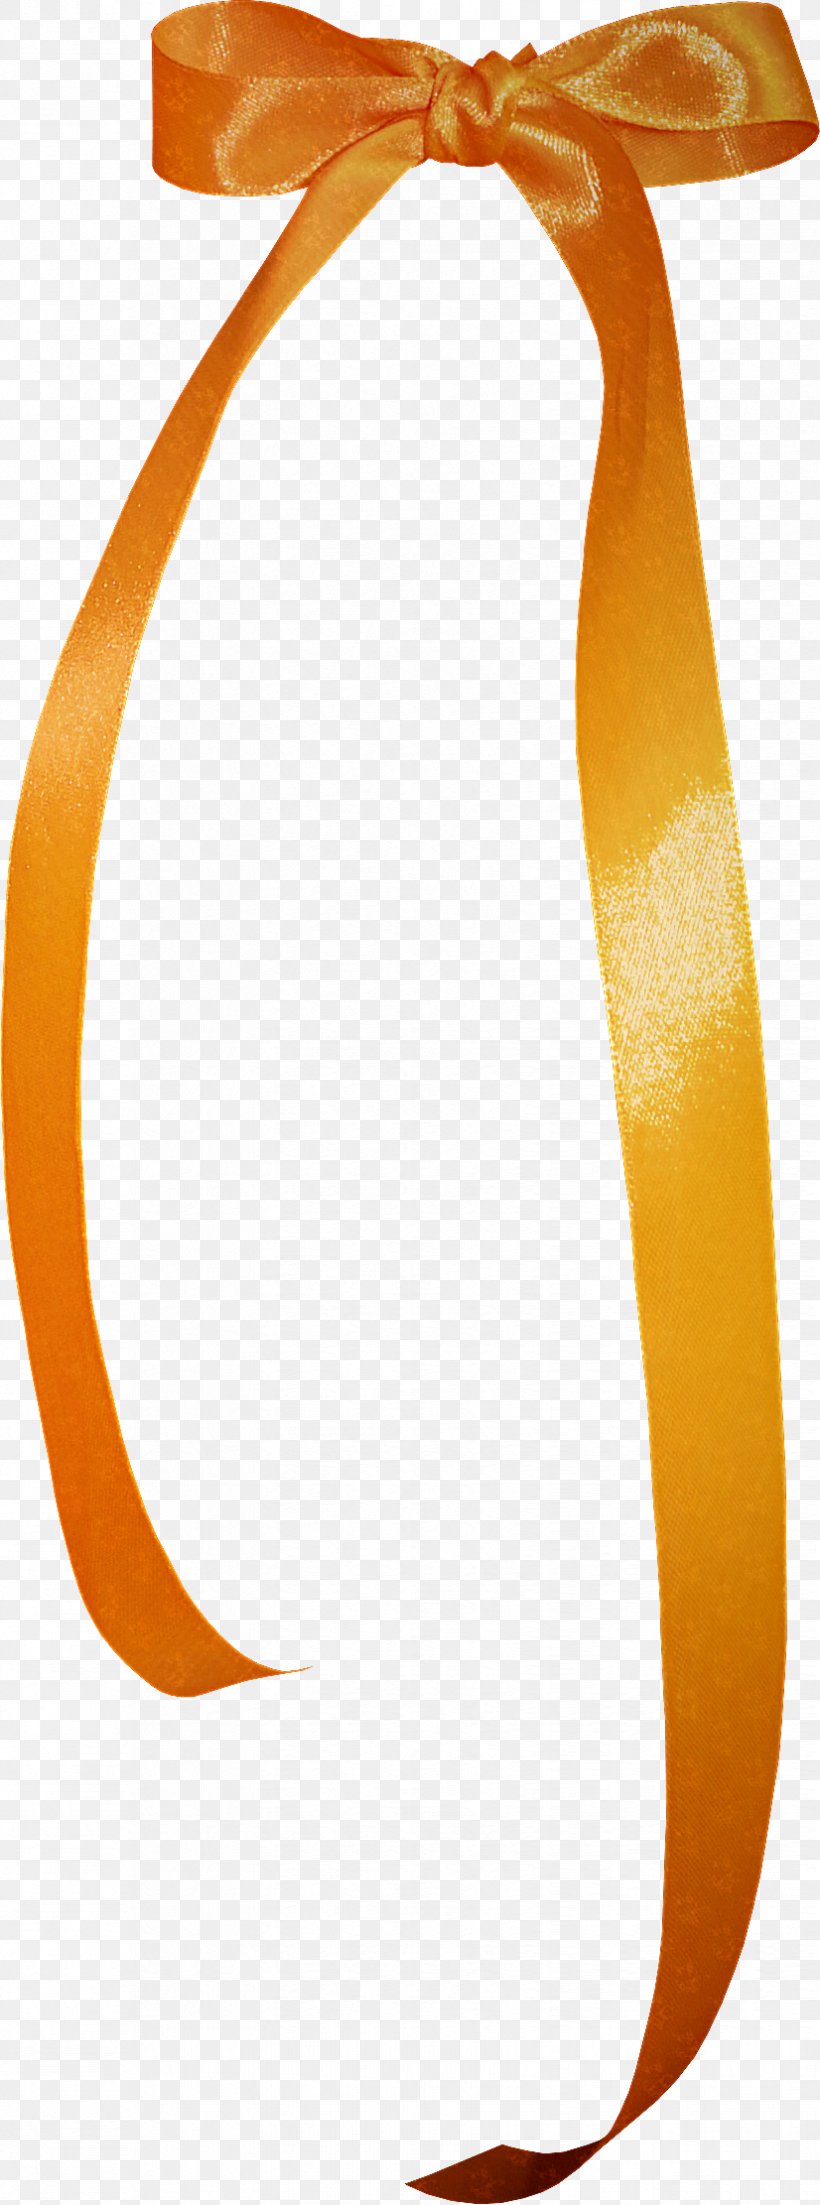 Ribbon Material Google Images Clip Art, PNG, 826x2222px, Ribbon, Google Images, Jpeg Network Graphics, Material, Orange Download Free